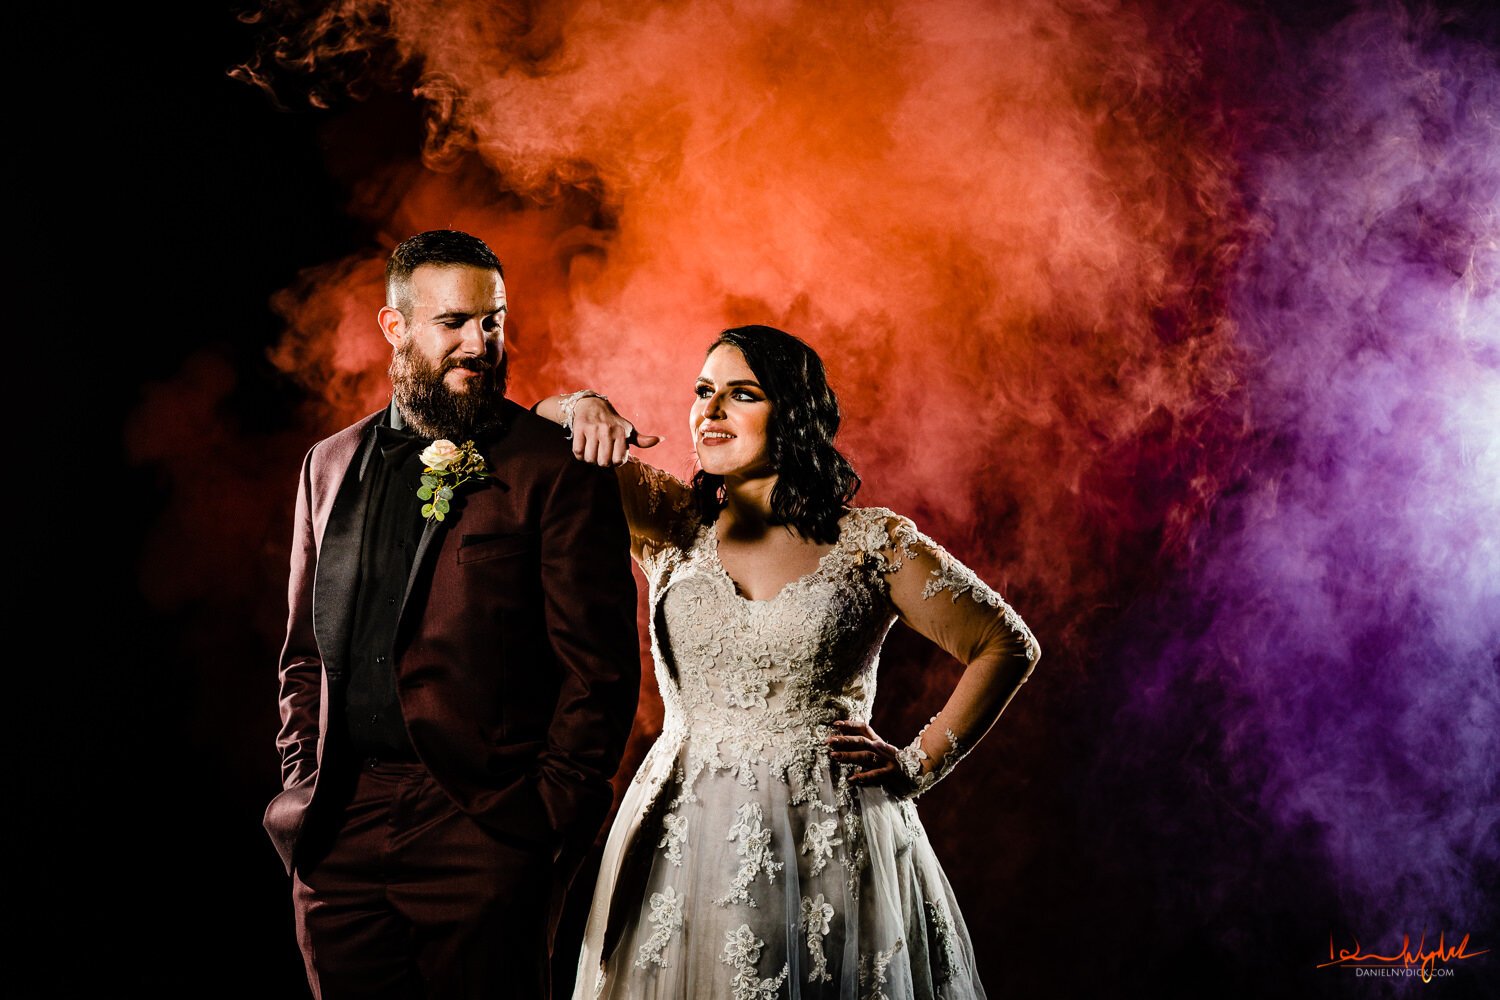 fearless epic night smokebomb portrait nj halloween wedding